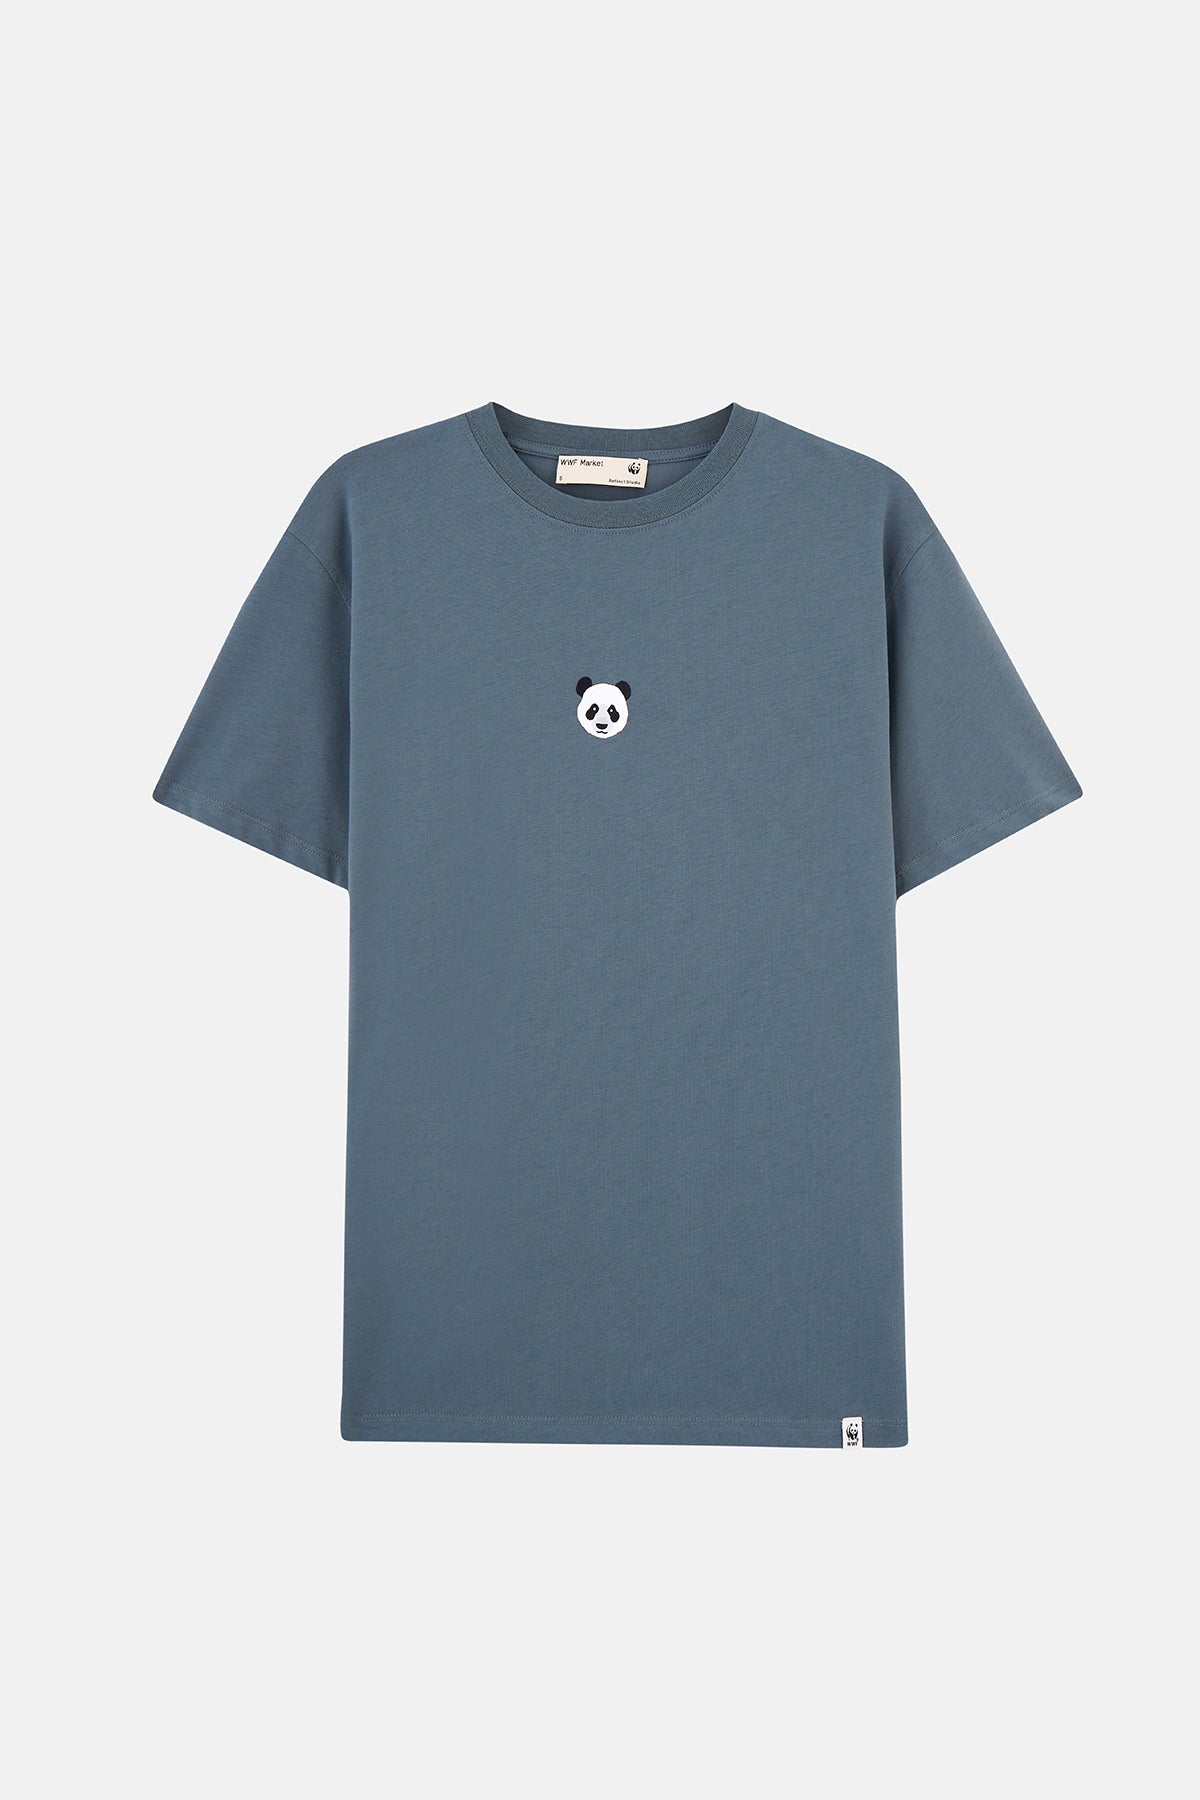 Panda Supreme T-shirt - Gri